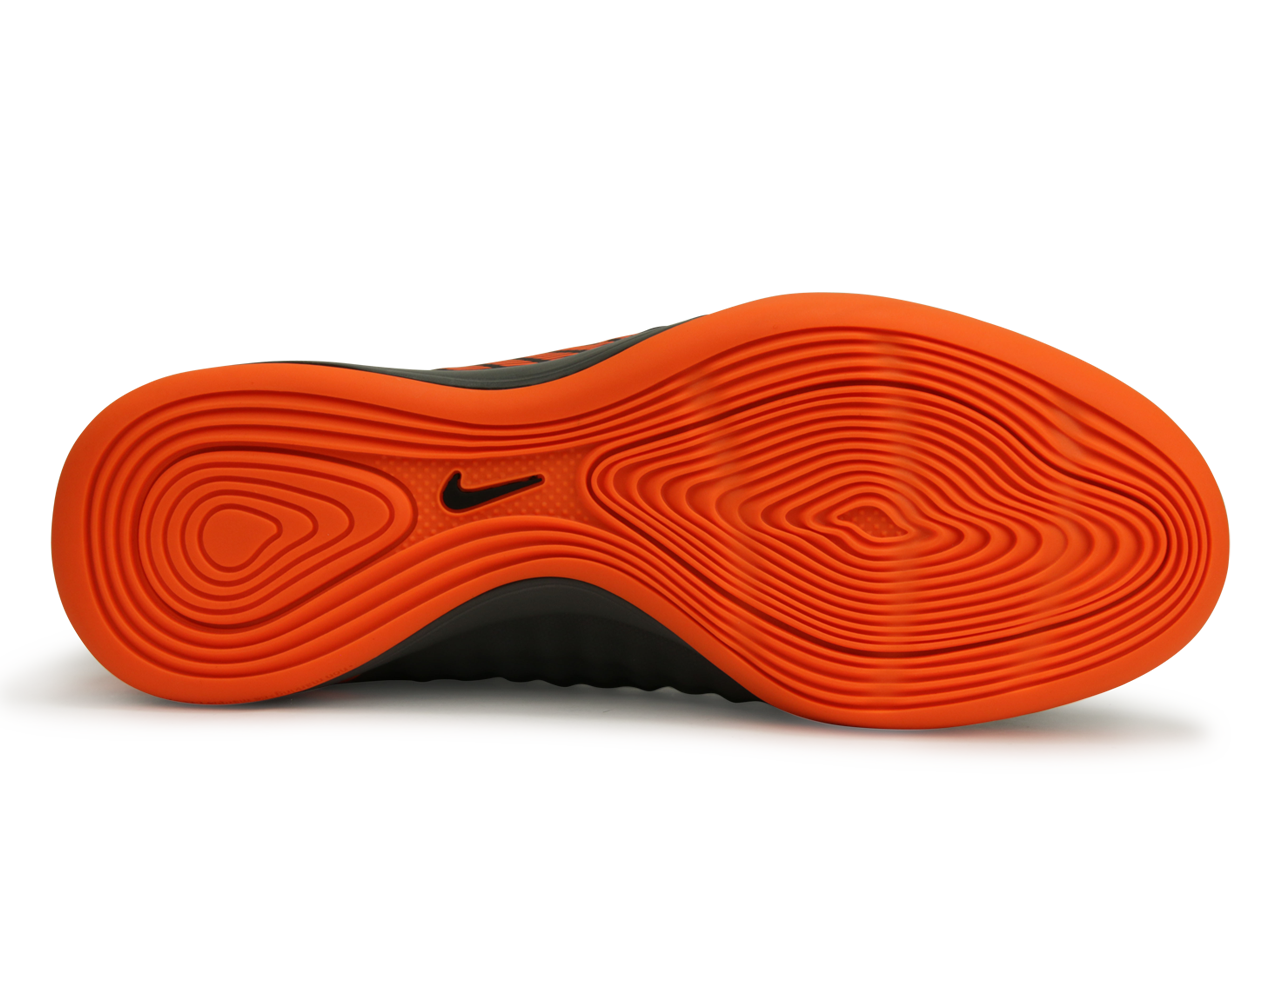 Nike Men's Magista Obrax 2 Academy DF Indoor Soccer Shoes Dark Grey/Total Orange/White